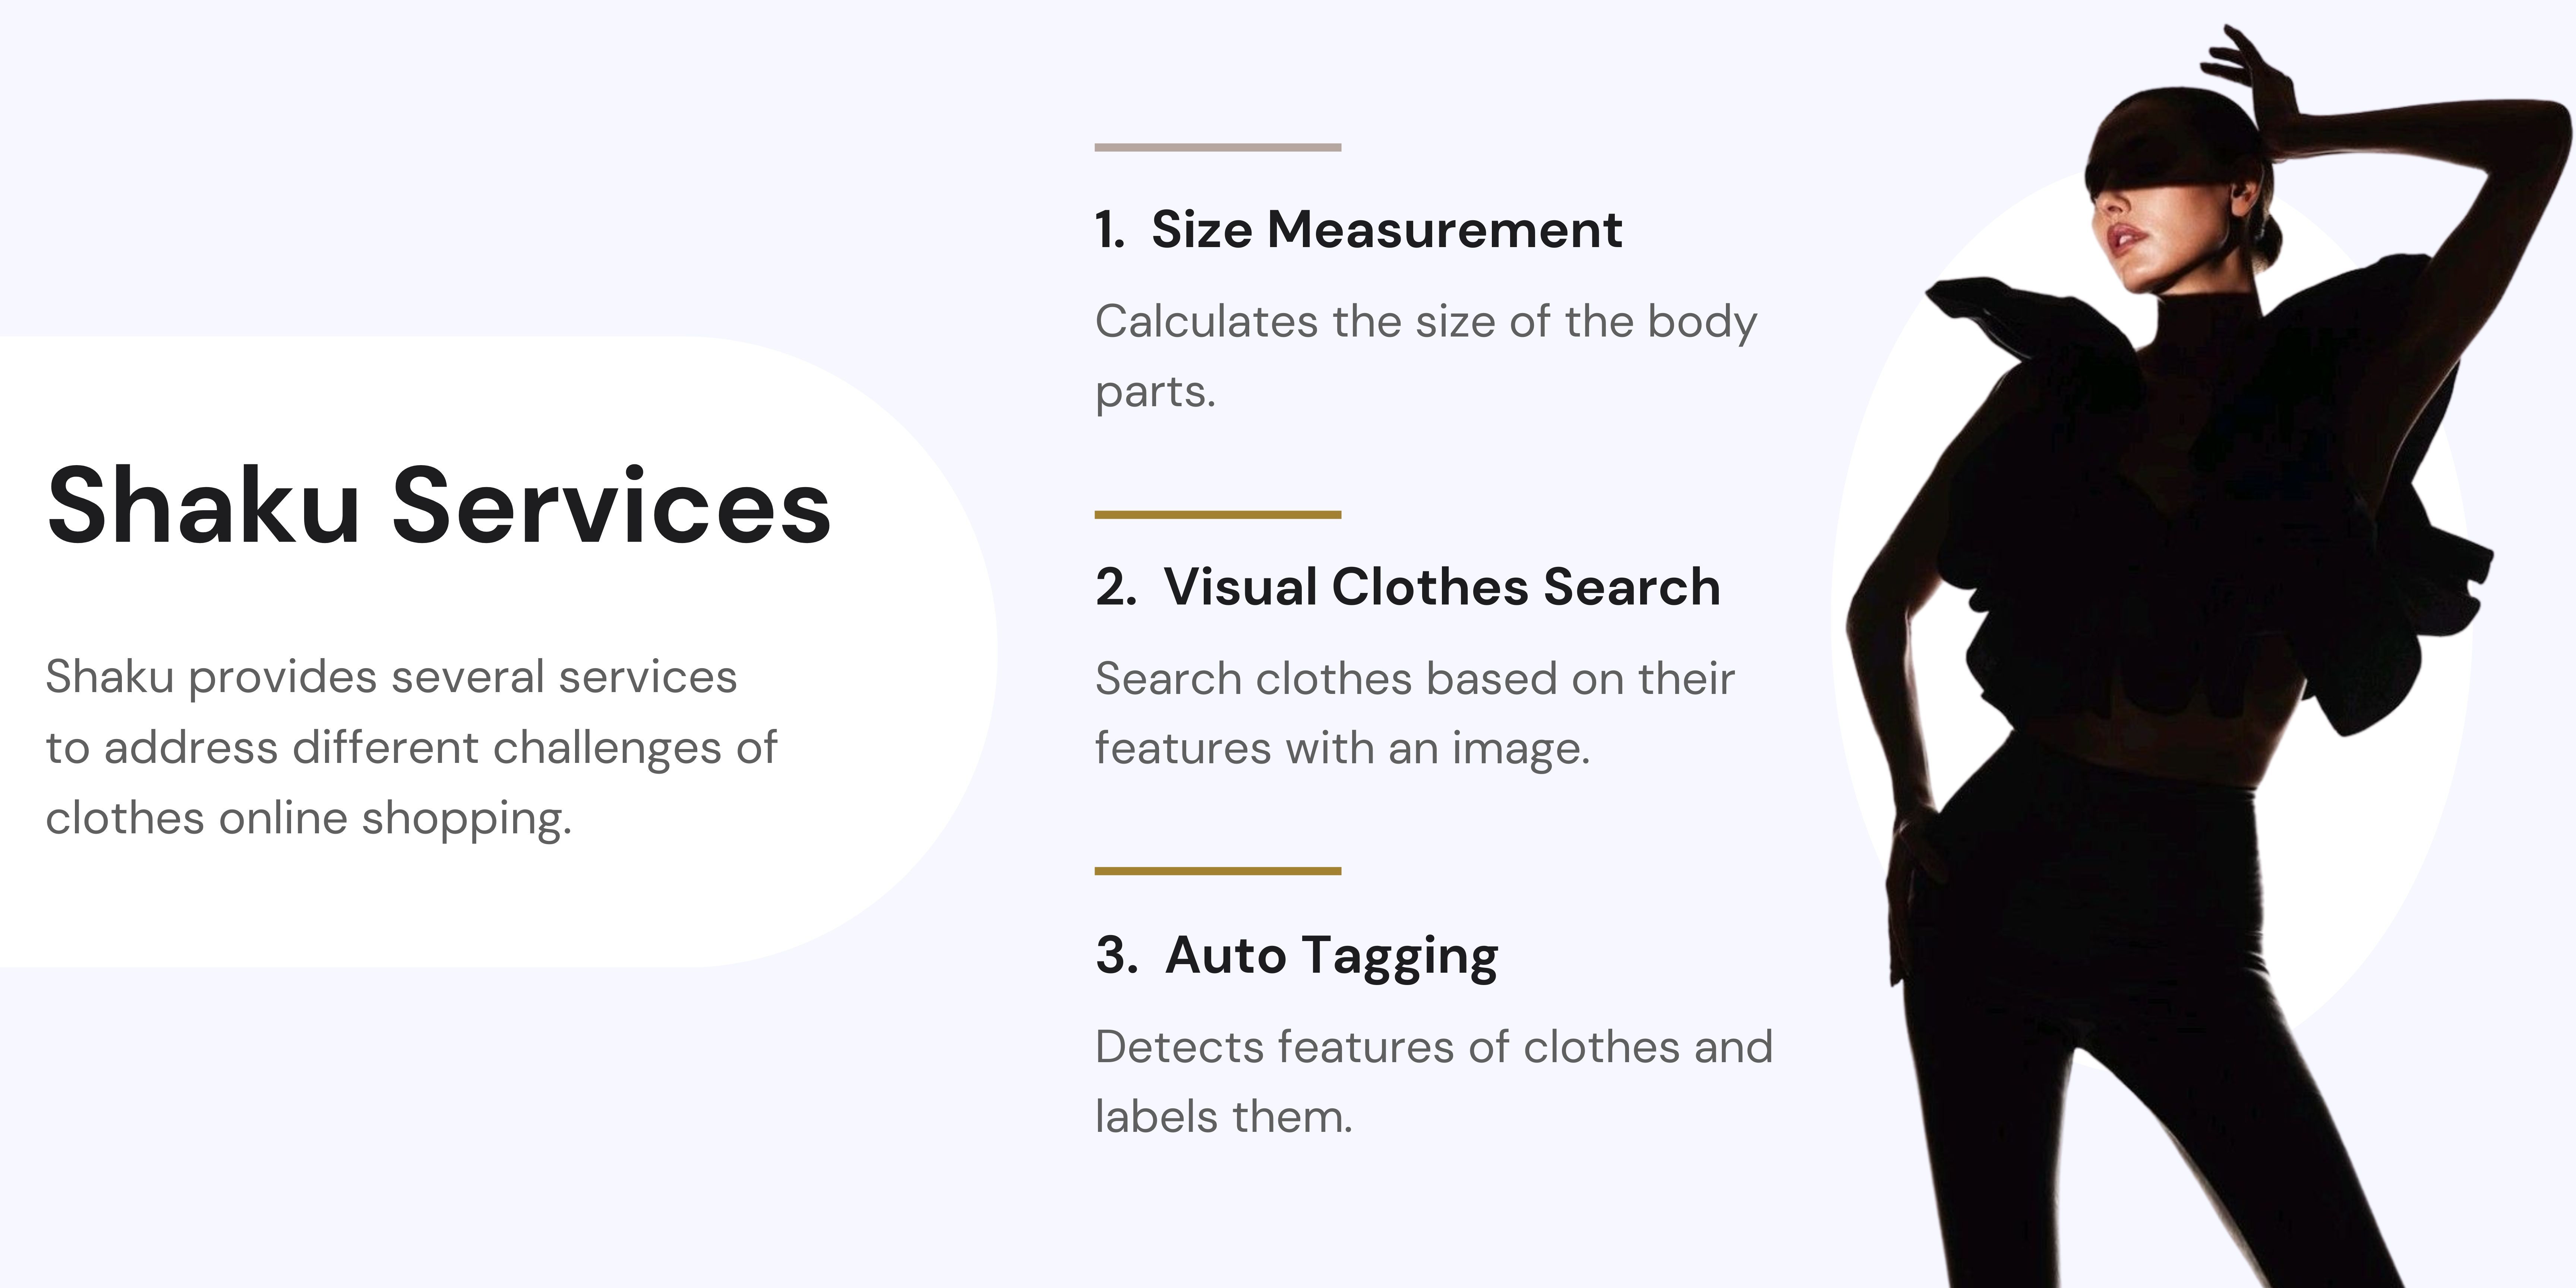 Shaku Services, AI body measurement, visual clothes search engine, auto tagging